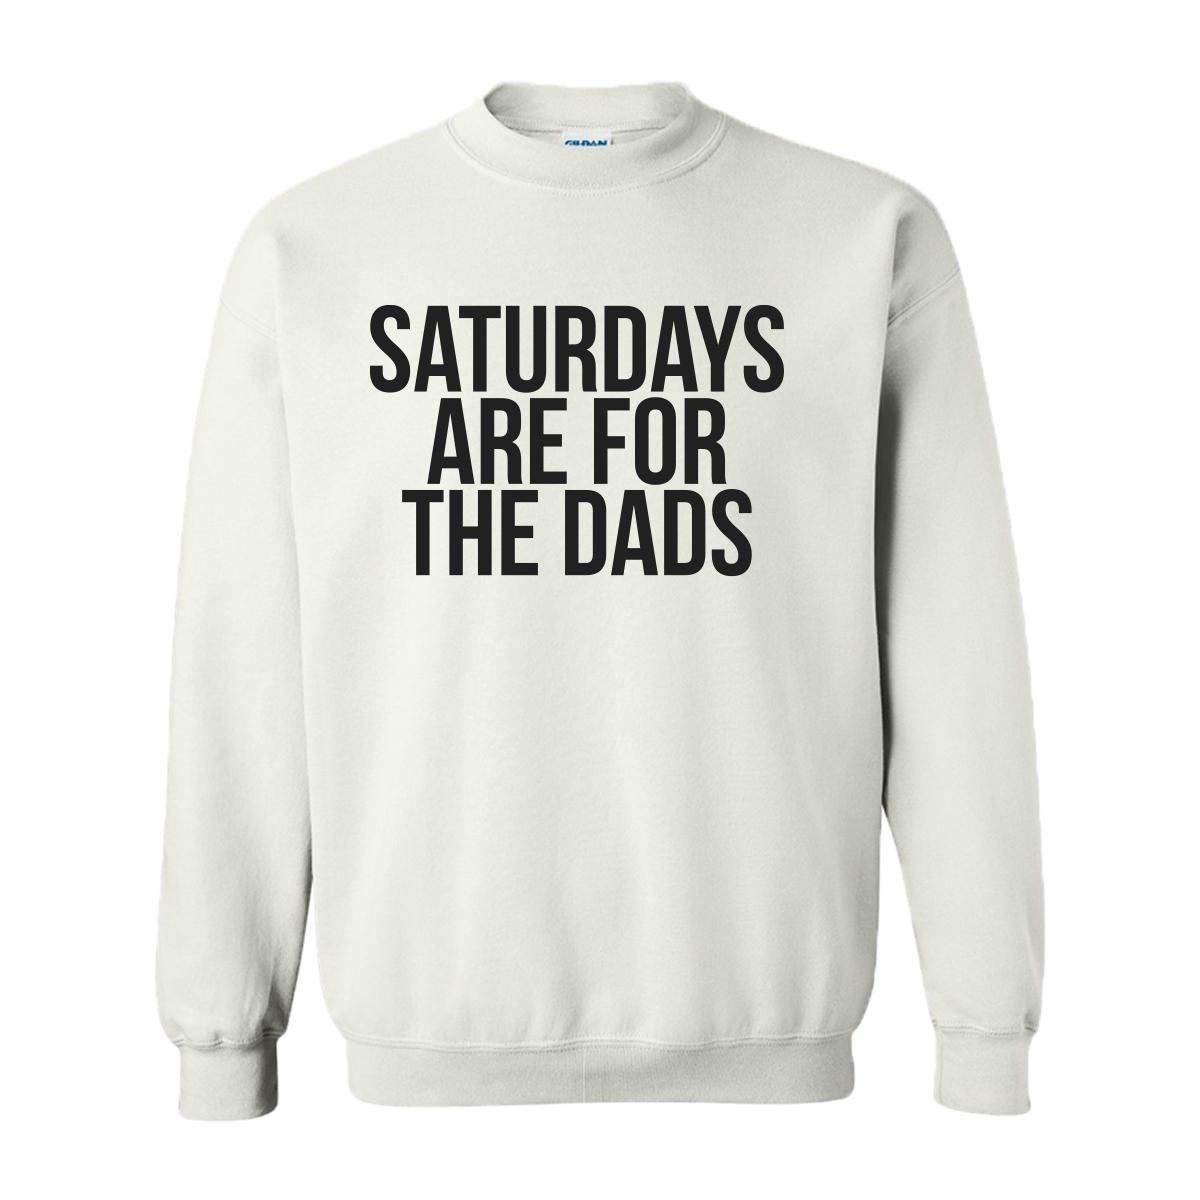 Saturdays Are For The Dads Crewneck-Crewnecks-SAFTB-White-S-Barstool Sports